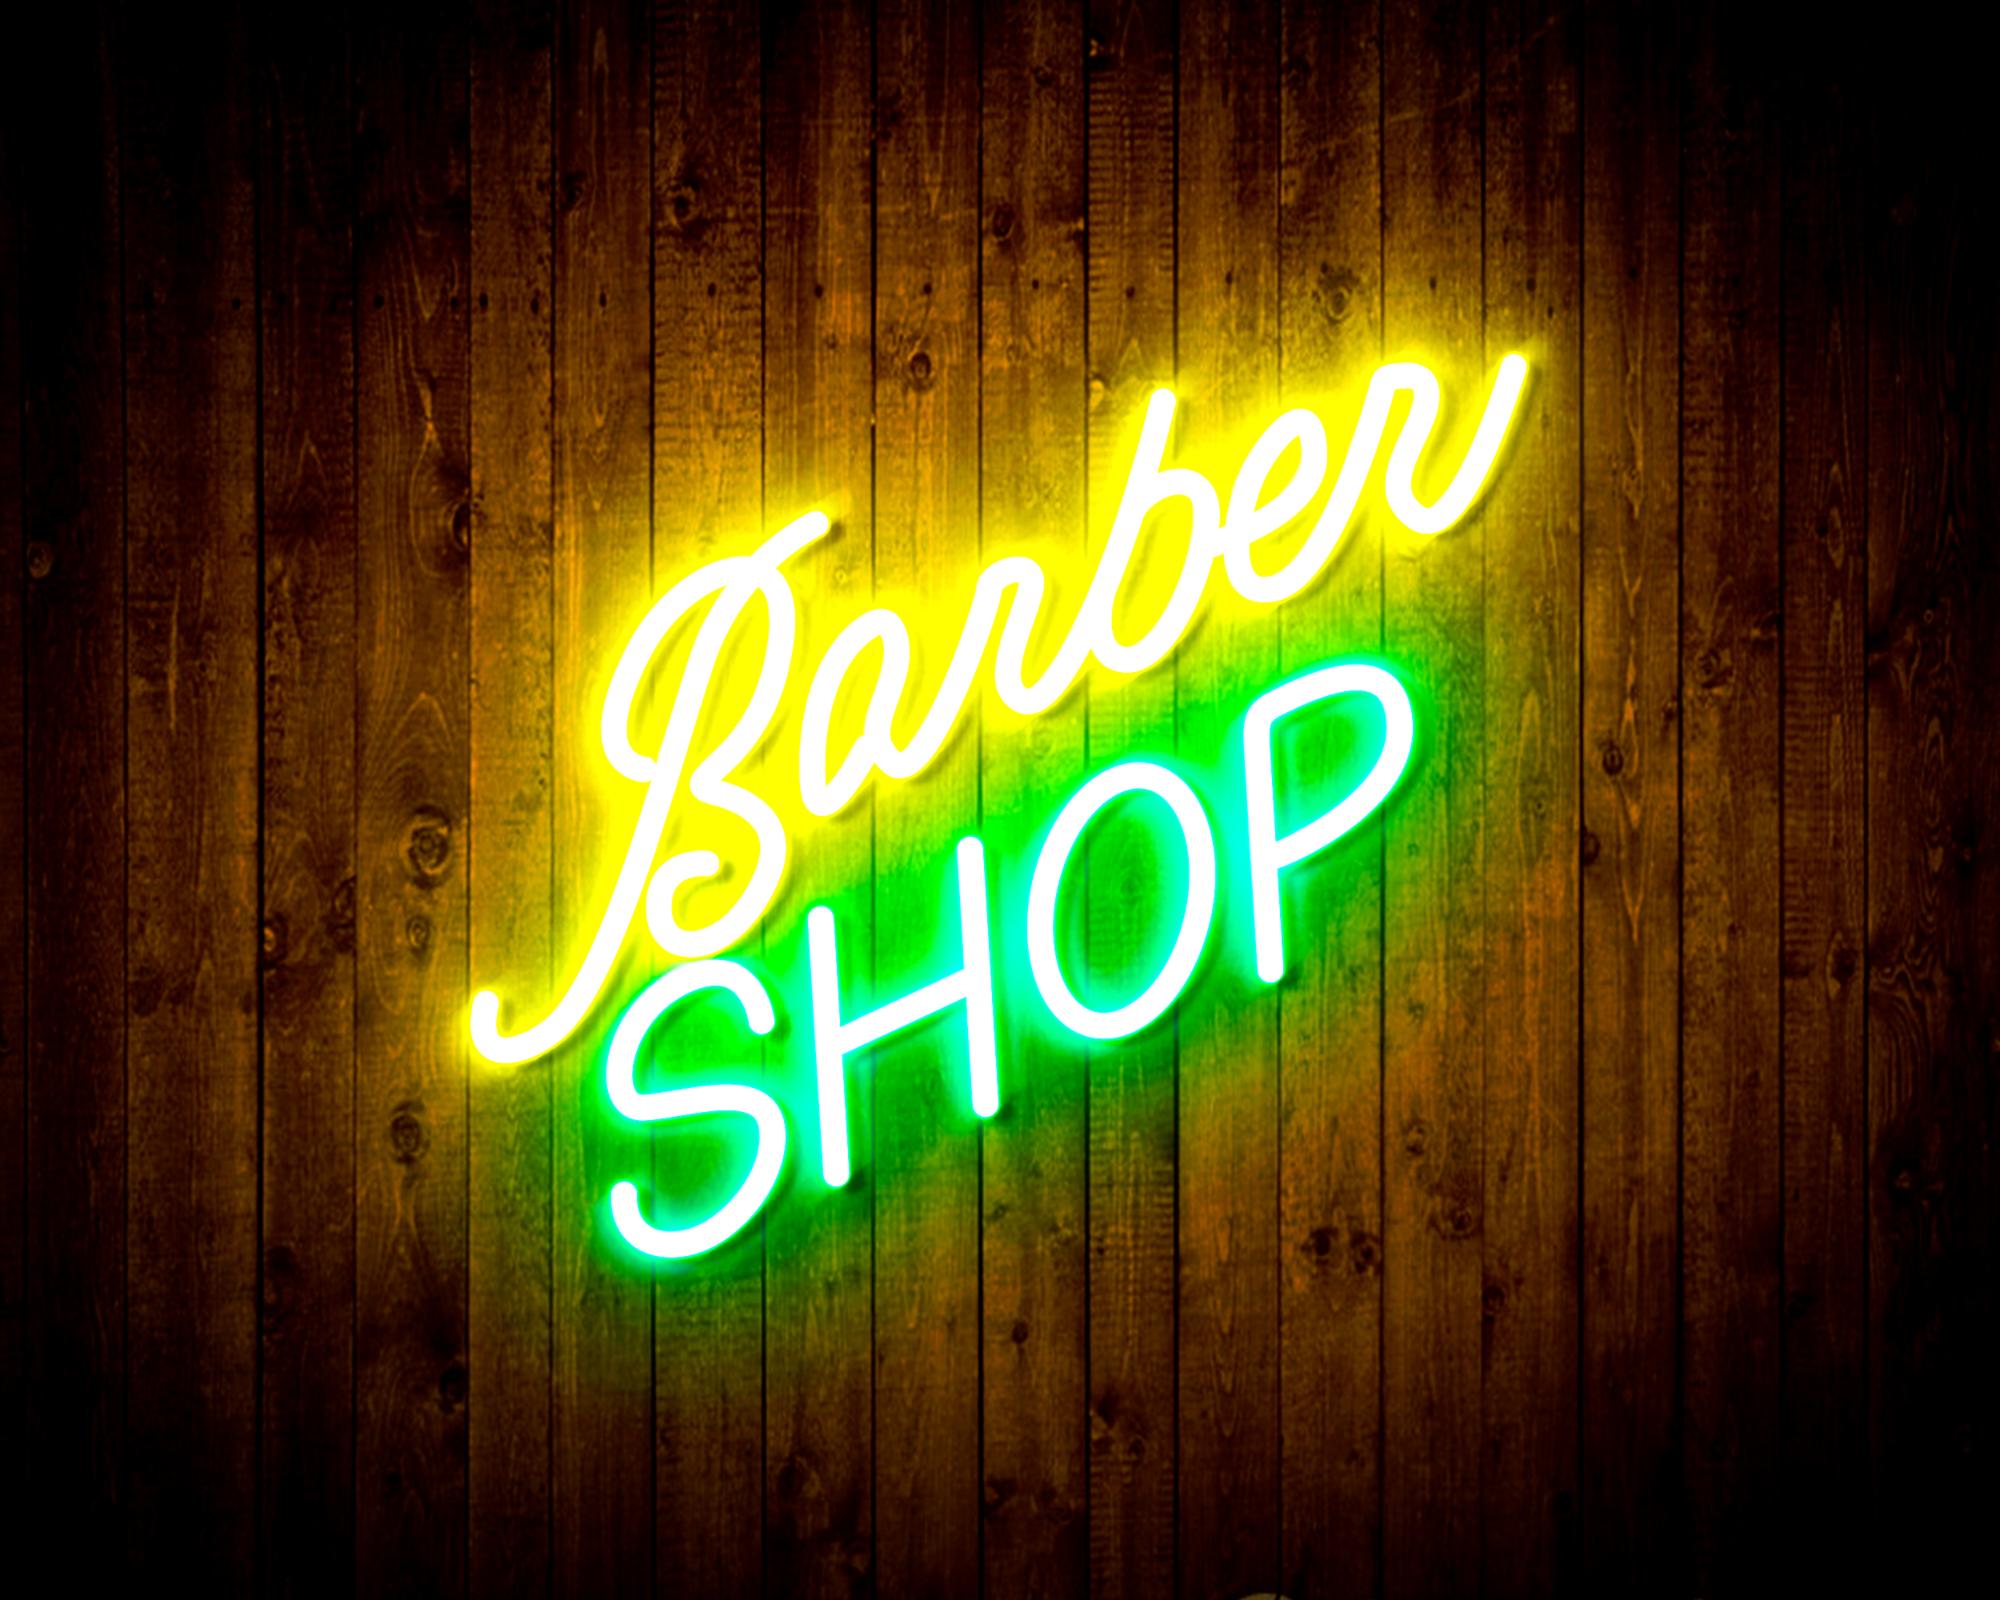 Barber Shop LED Neon Sign Wall Light